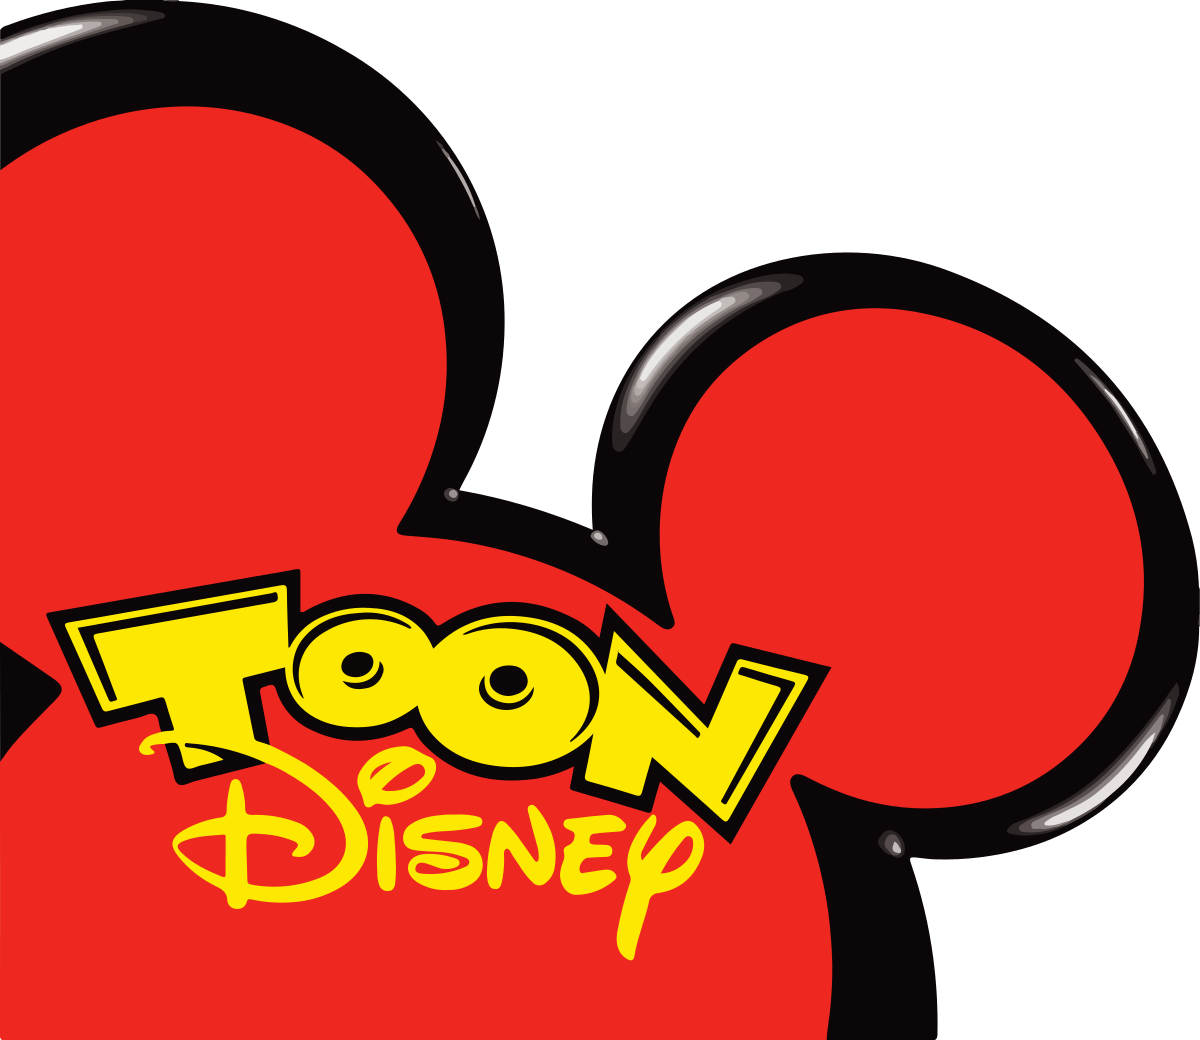 Playhouse Disney Channel Logo - Toon Disney